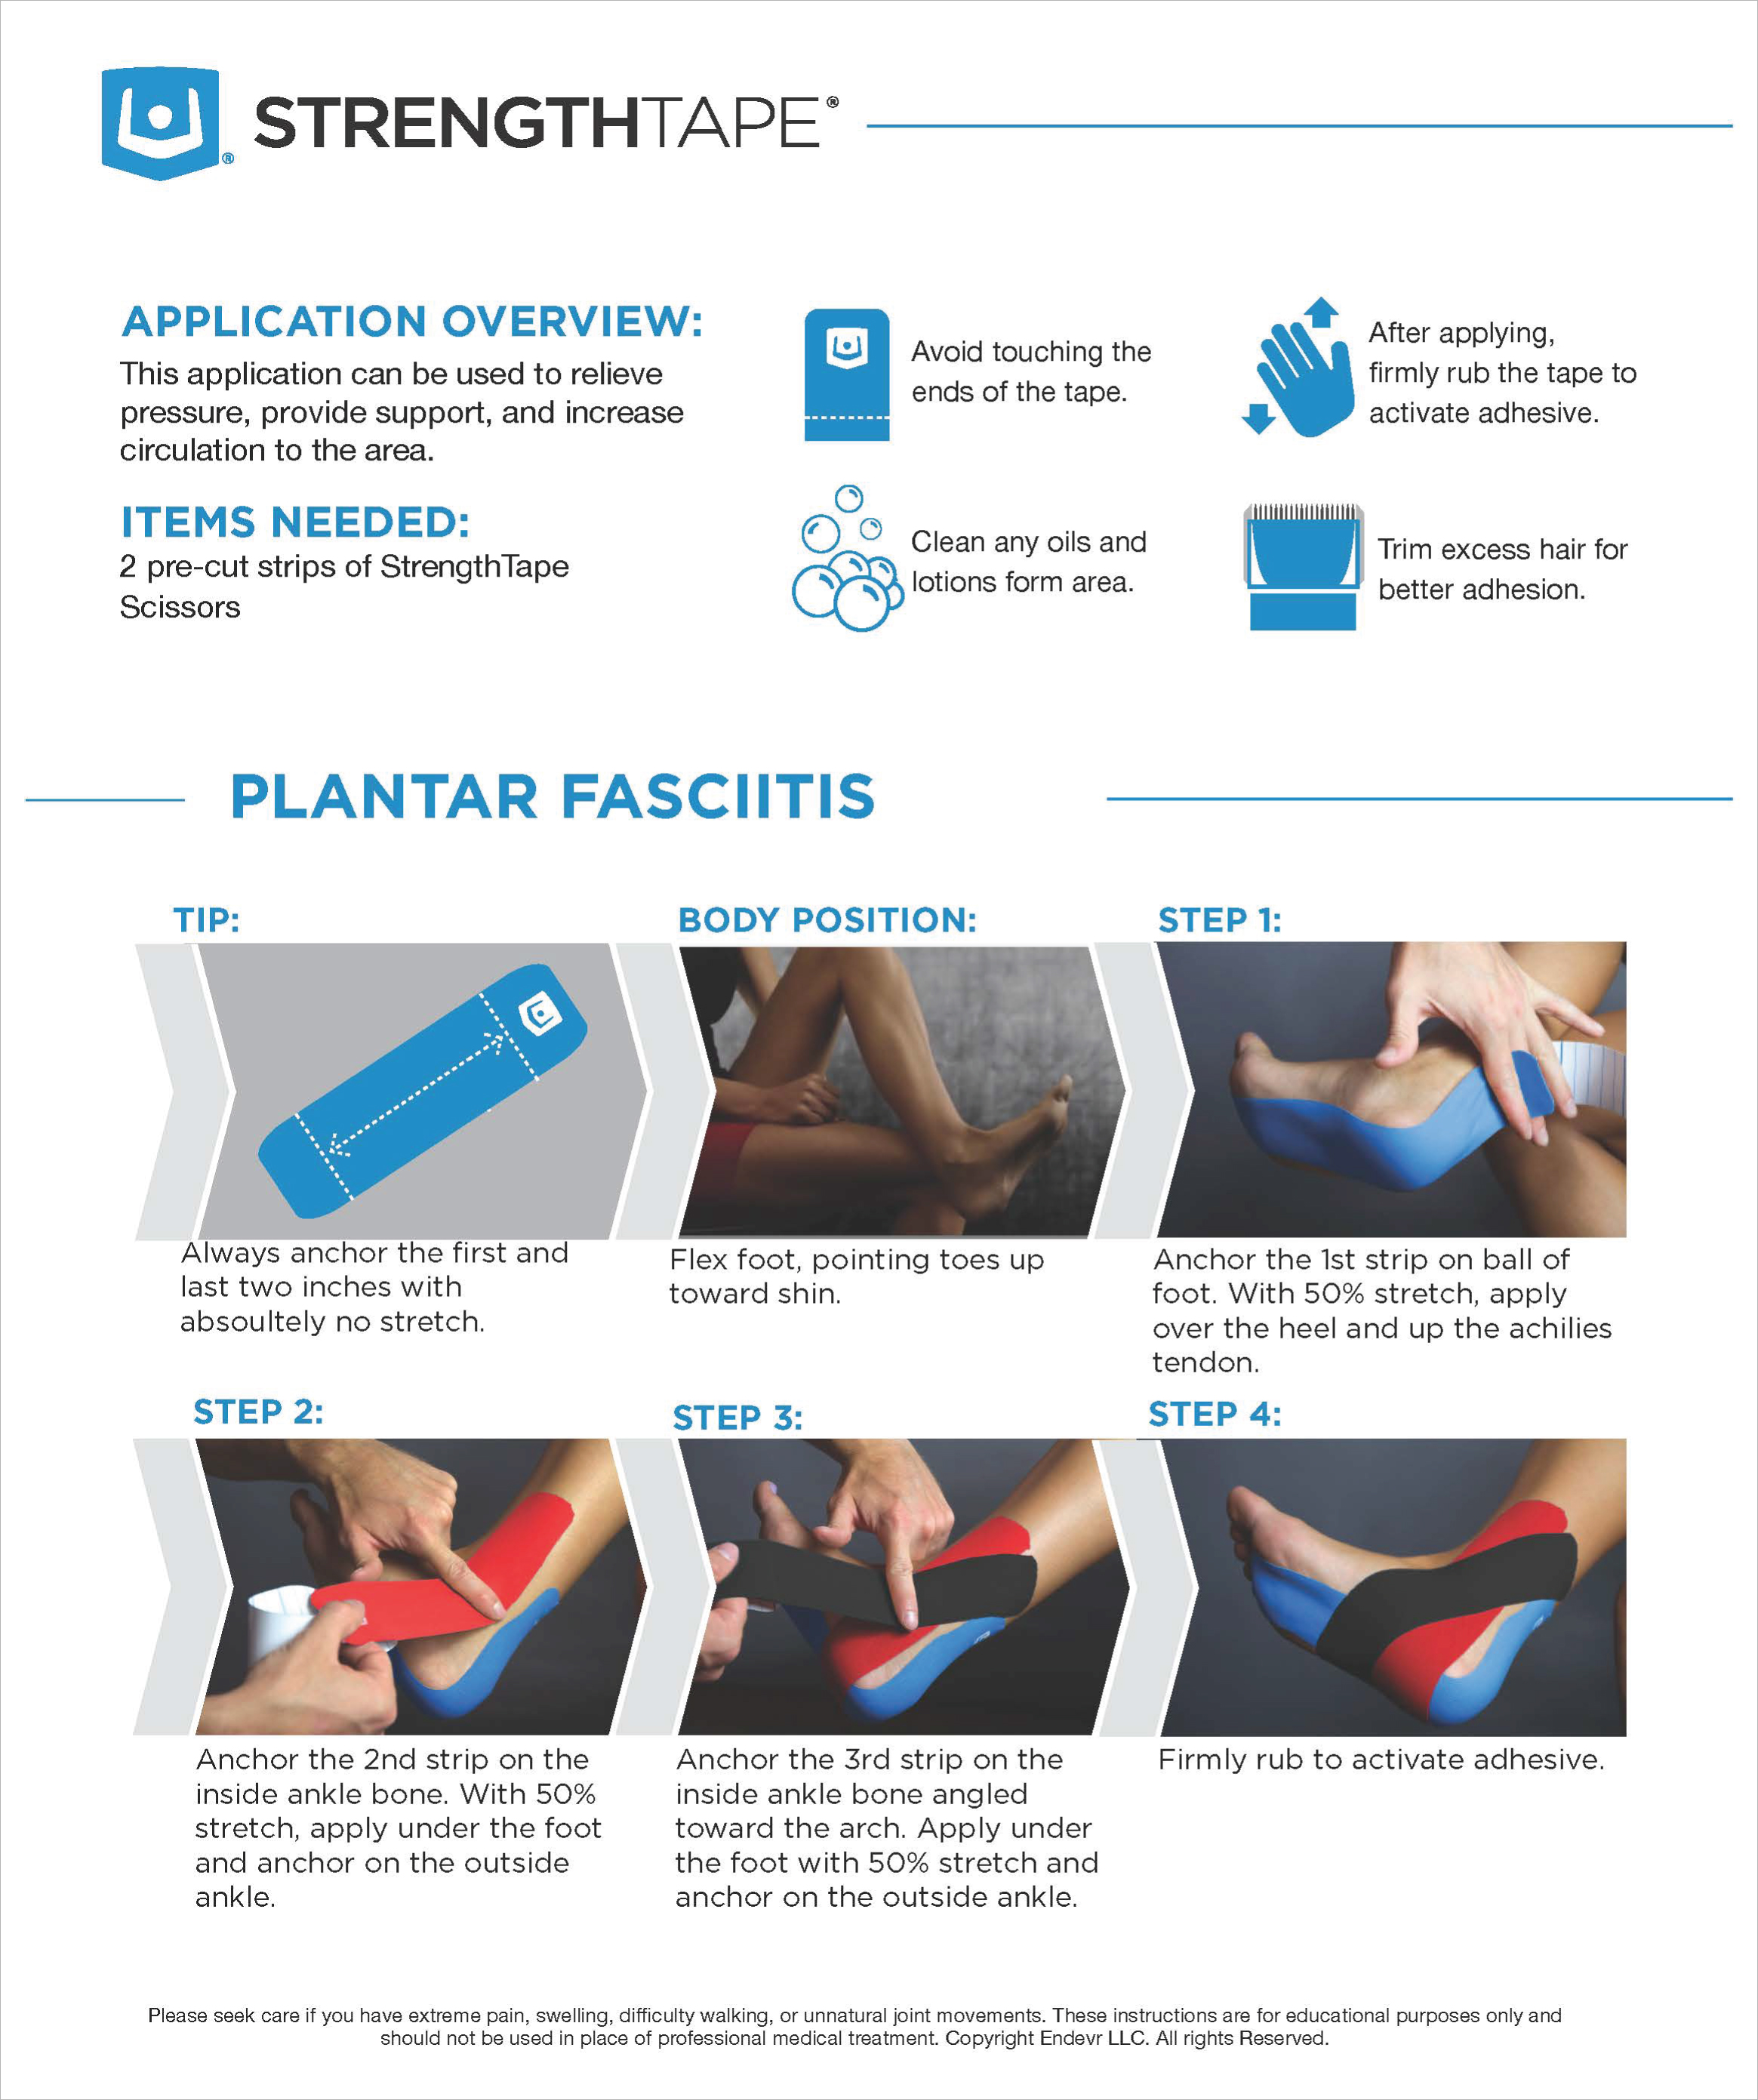 StrengthTape Plantar Fasciitis Taping Instructions